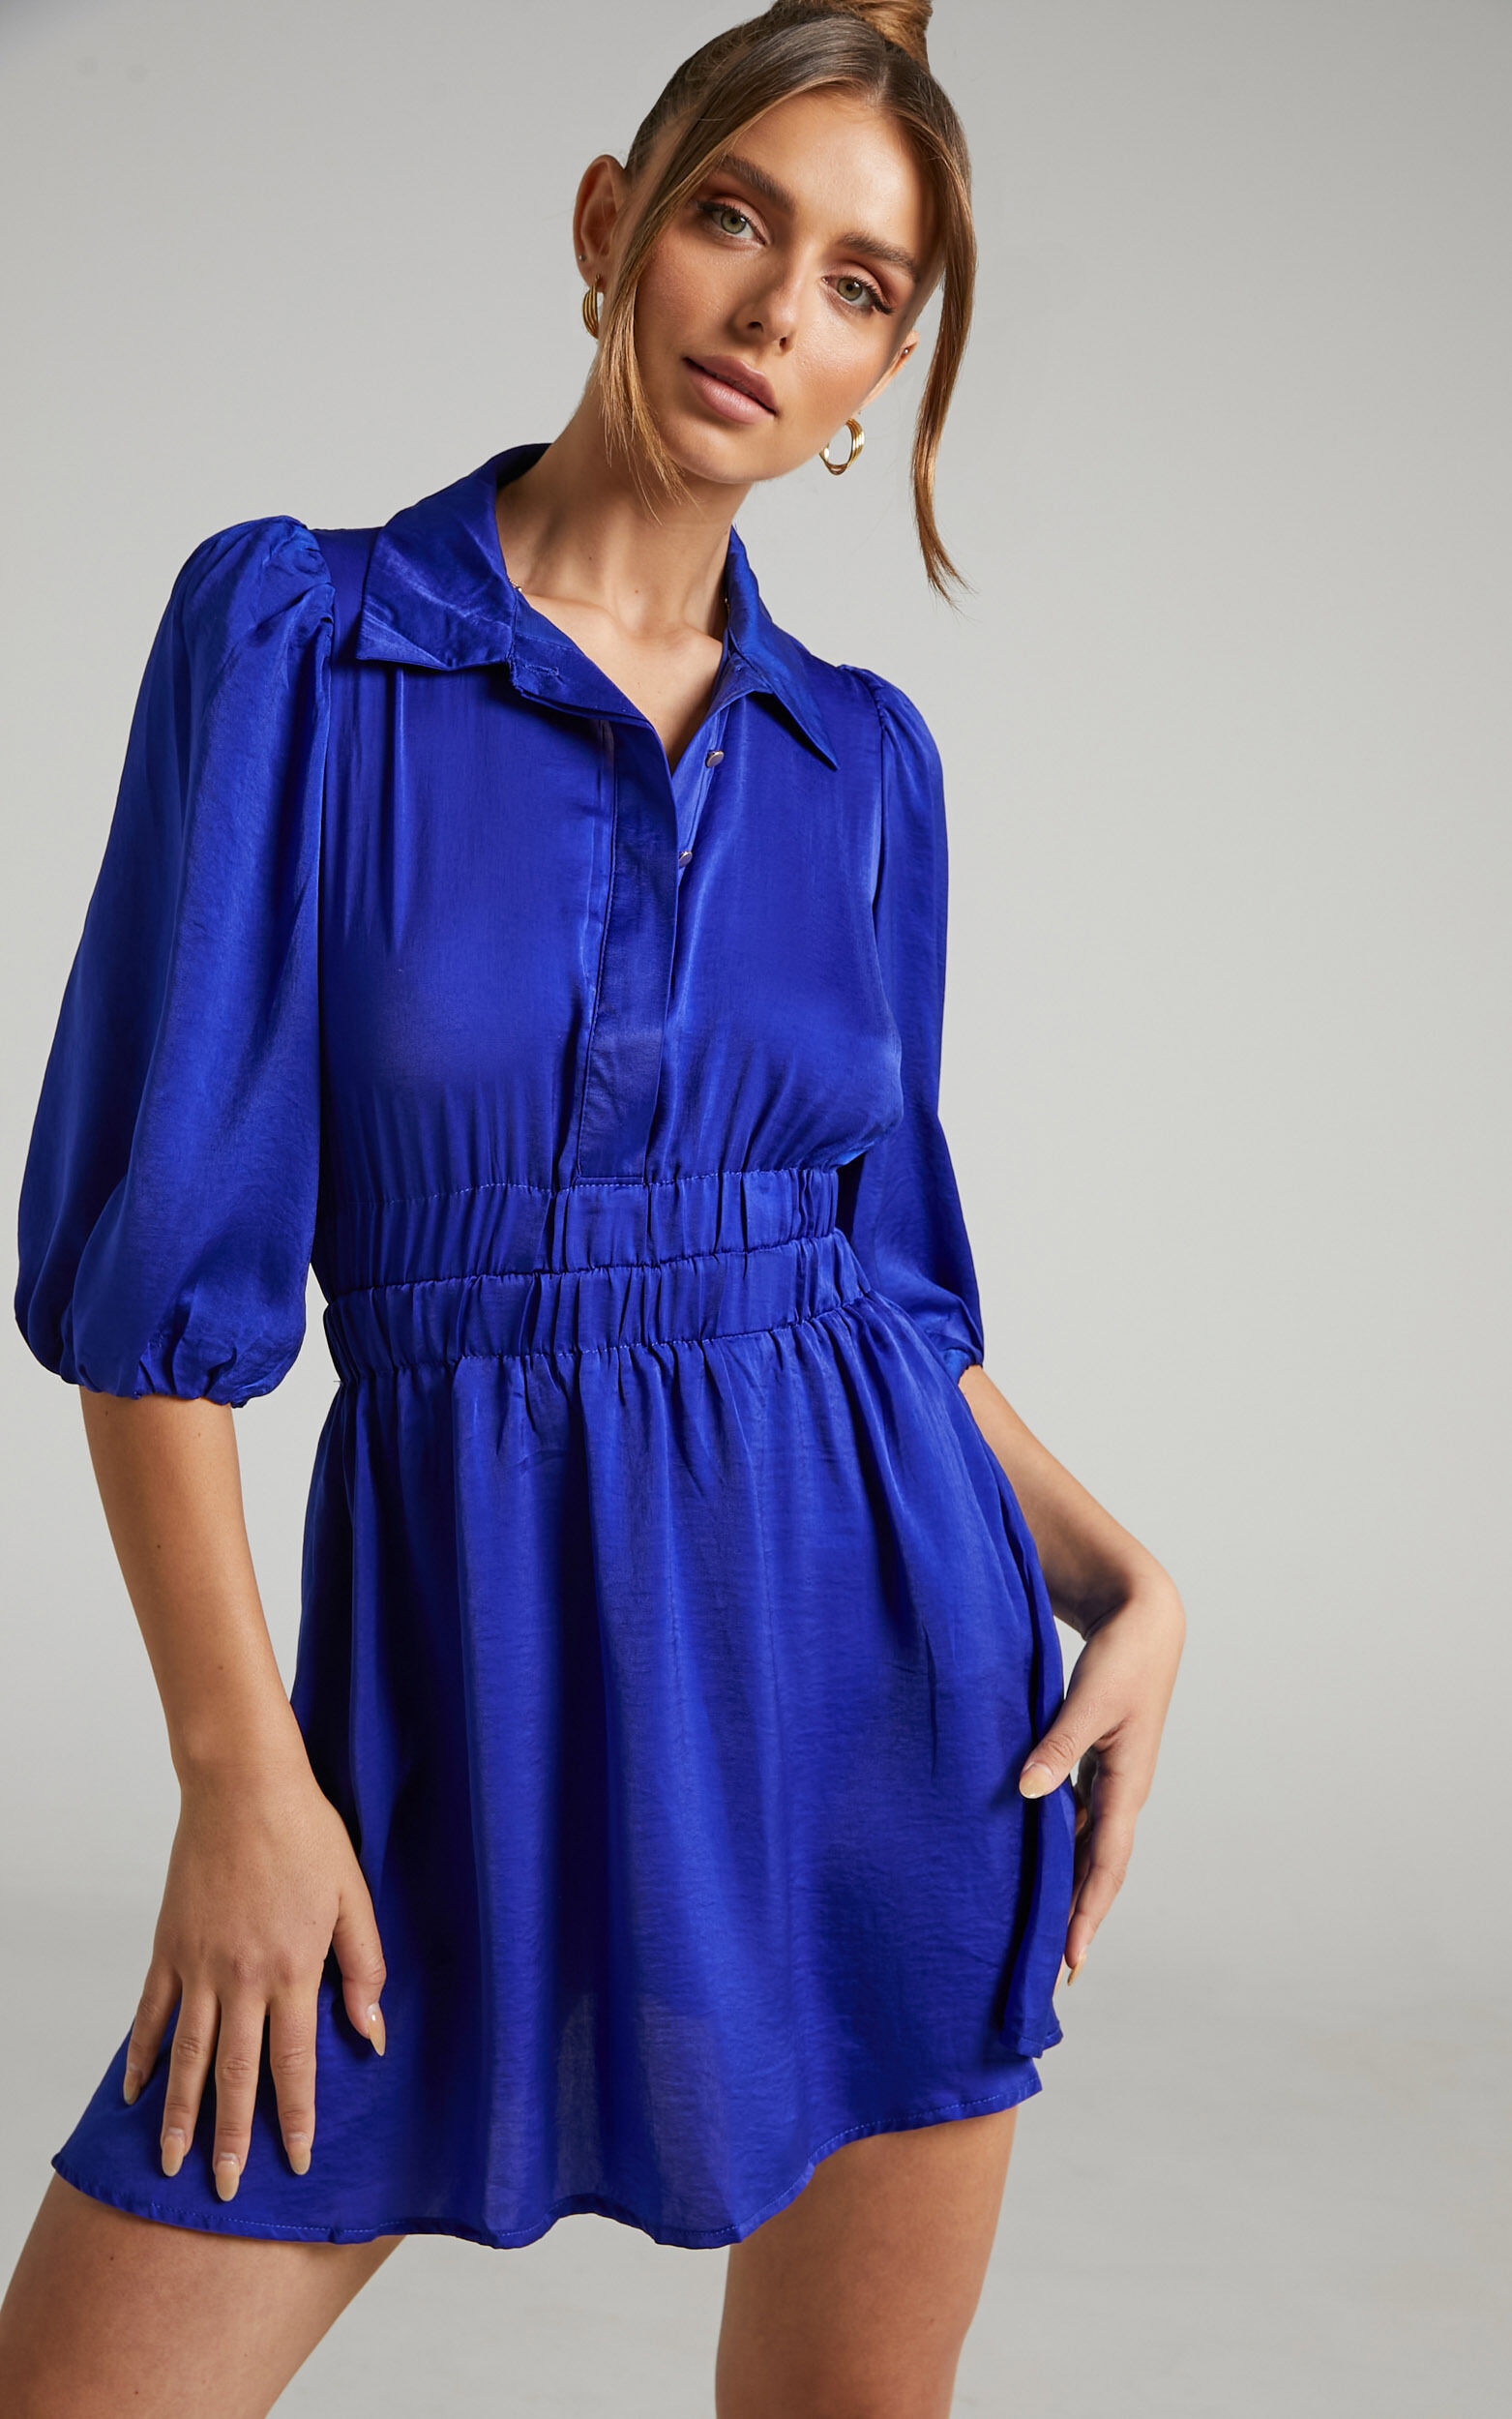 Raicy Mini Dress - Collared Shirred Waist Dress in Blue - 04, BLU2